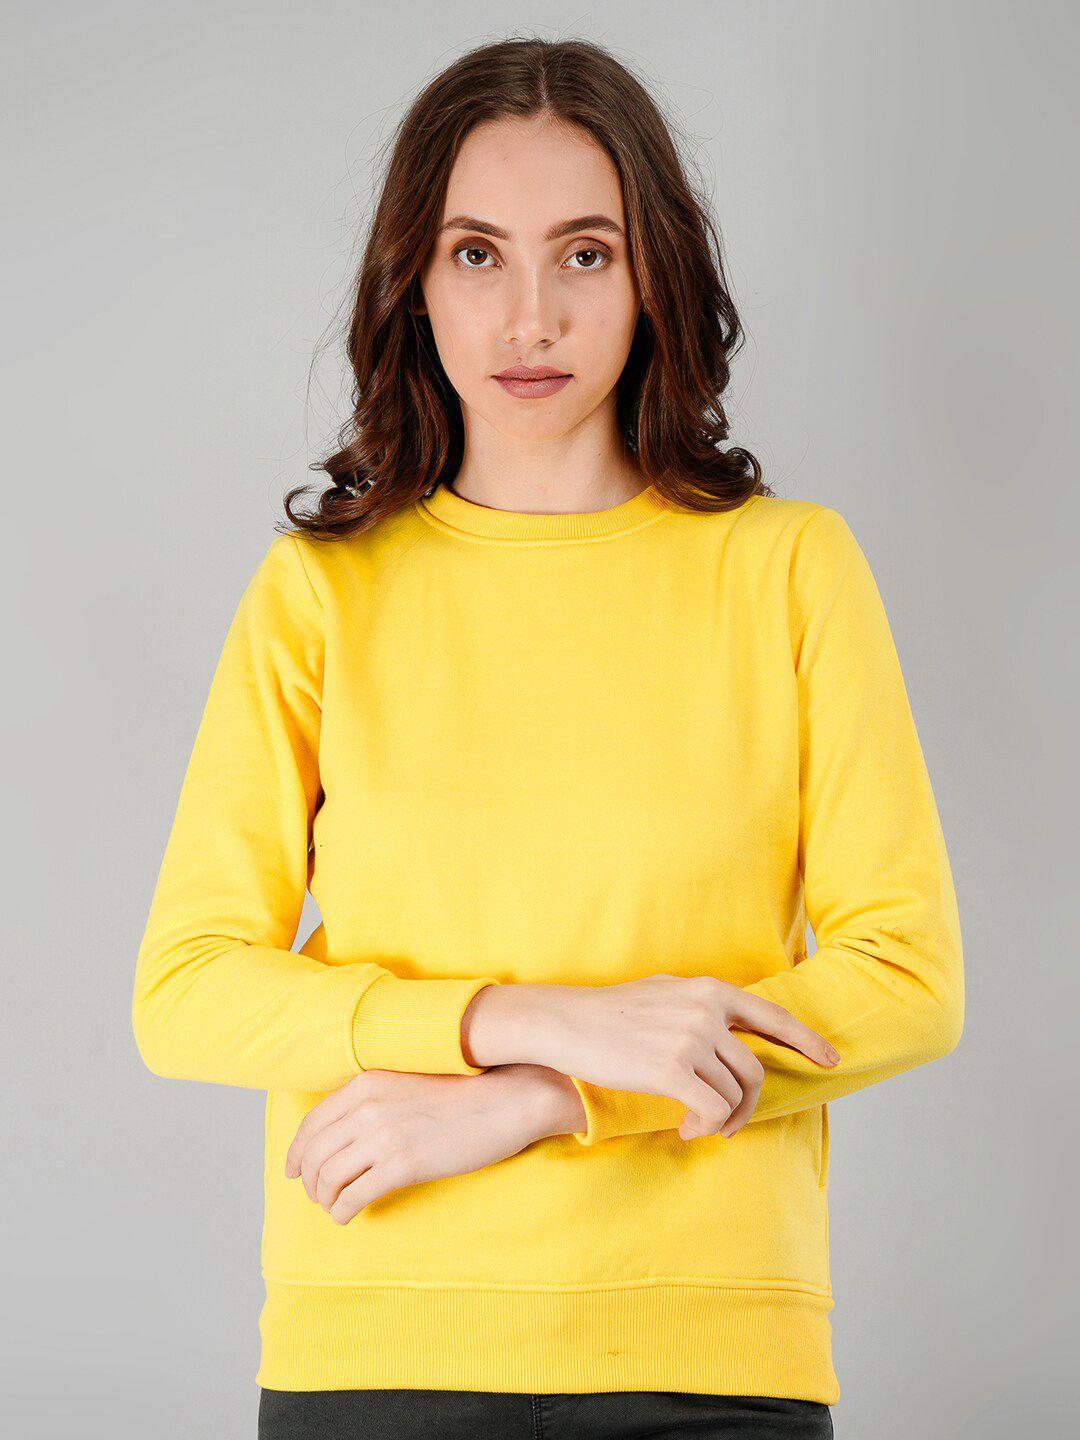 besimple women yellow sweatshirt